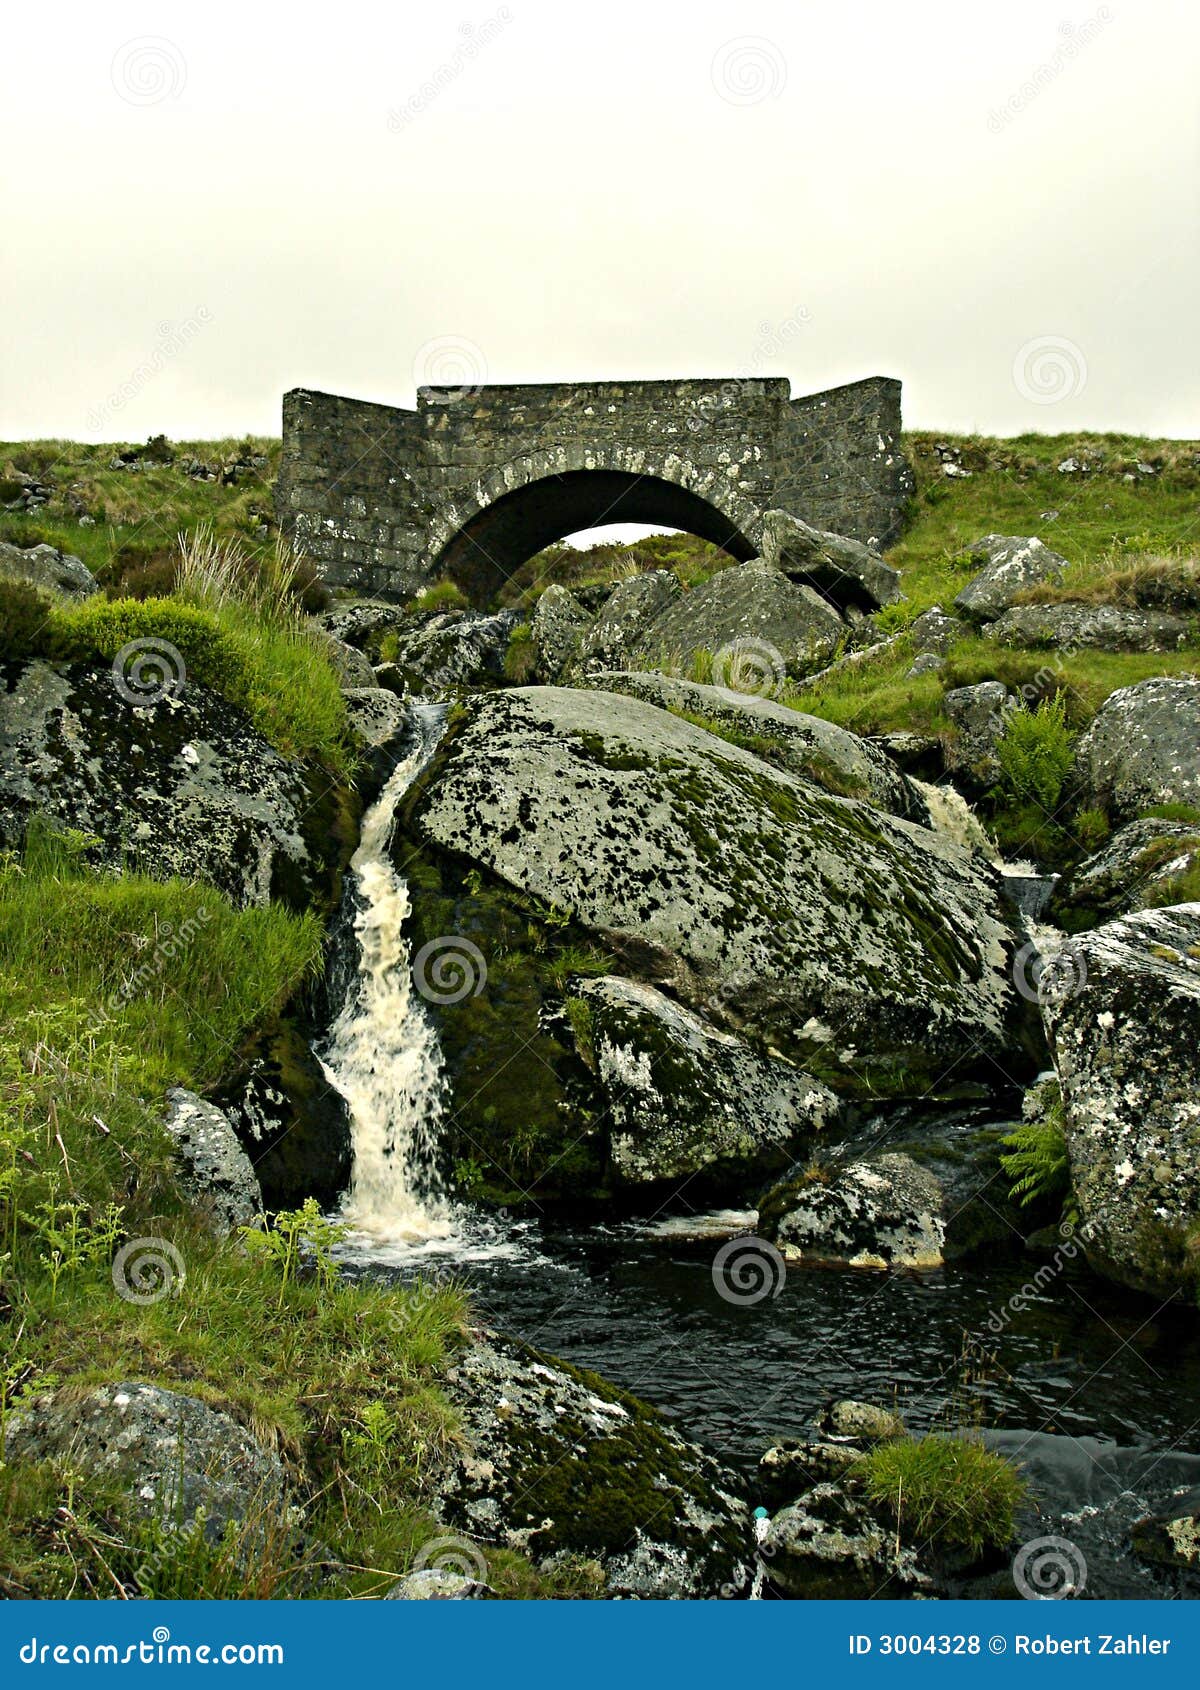 stone bridge sally gap ireland